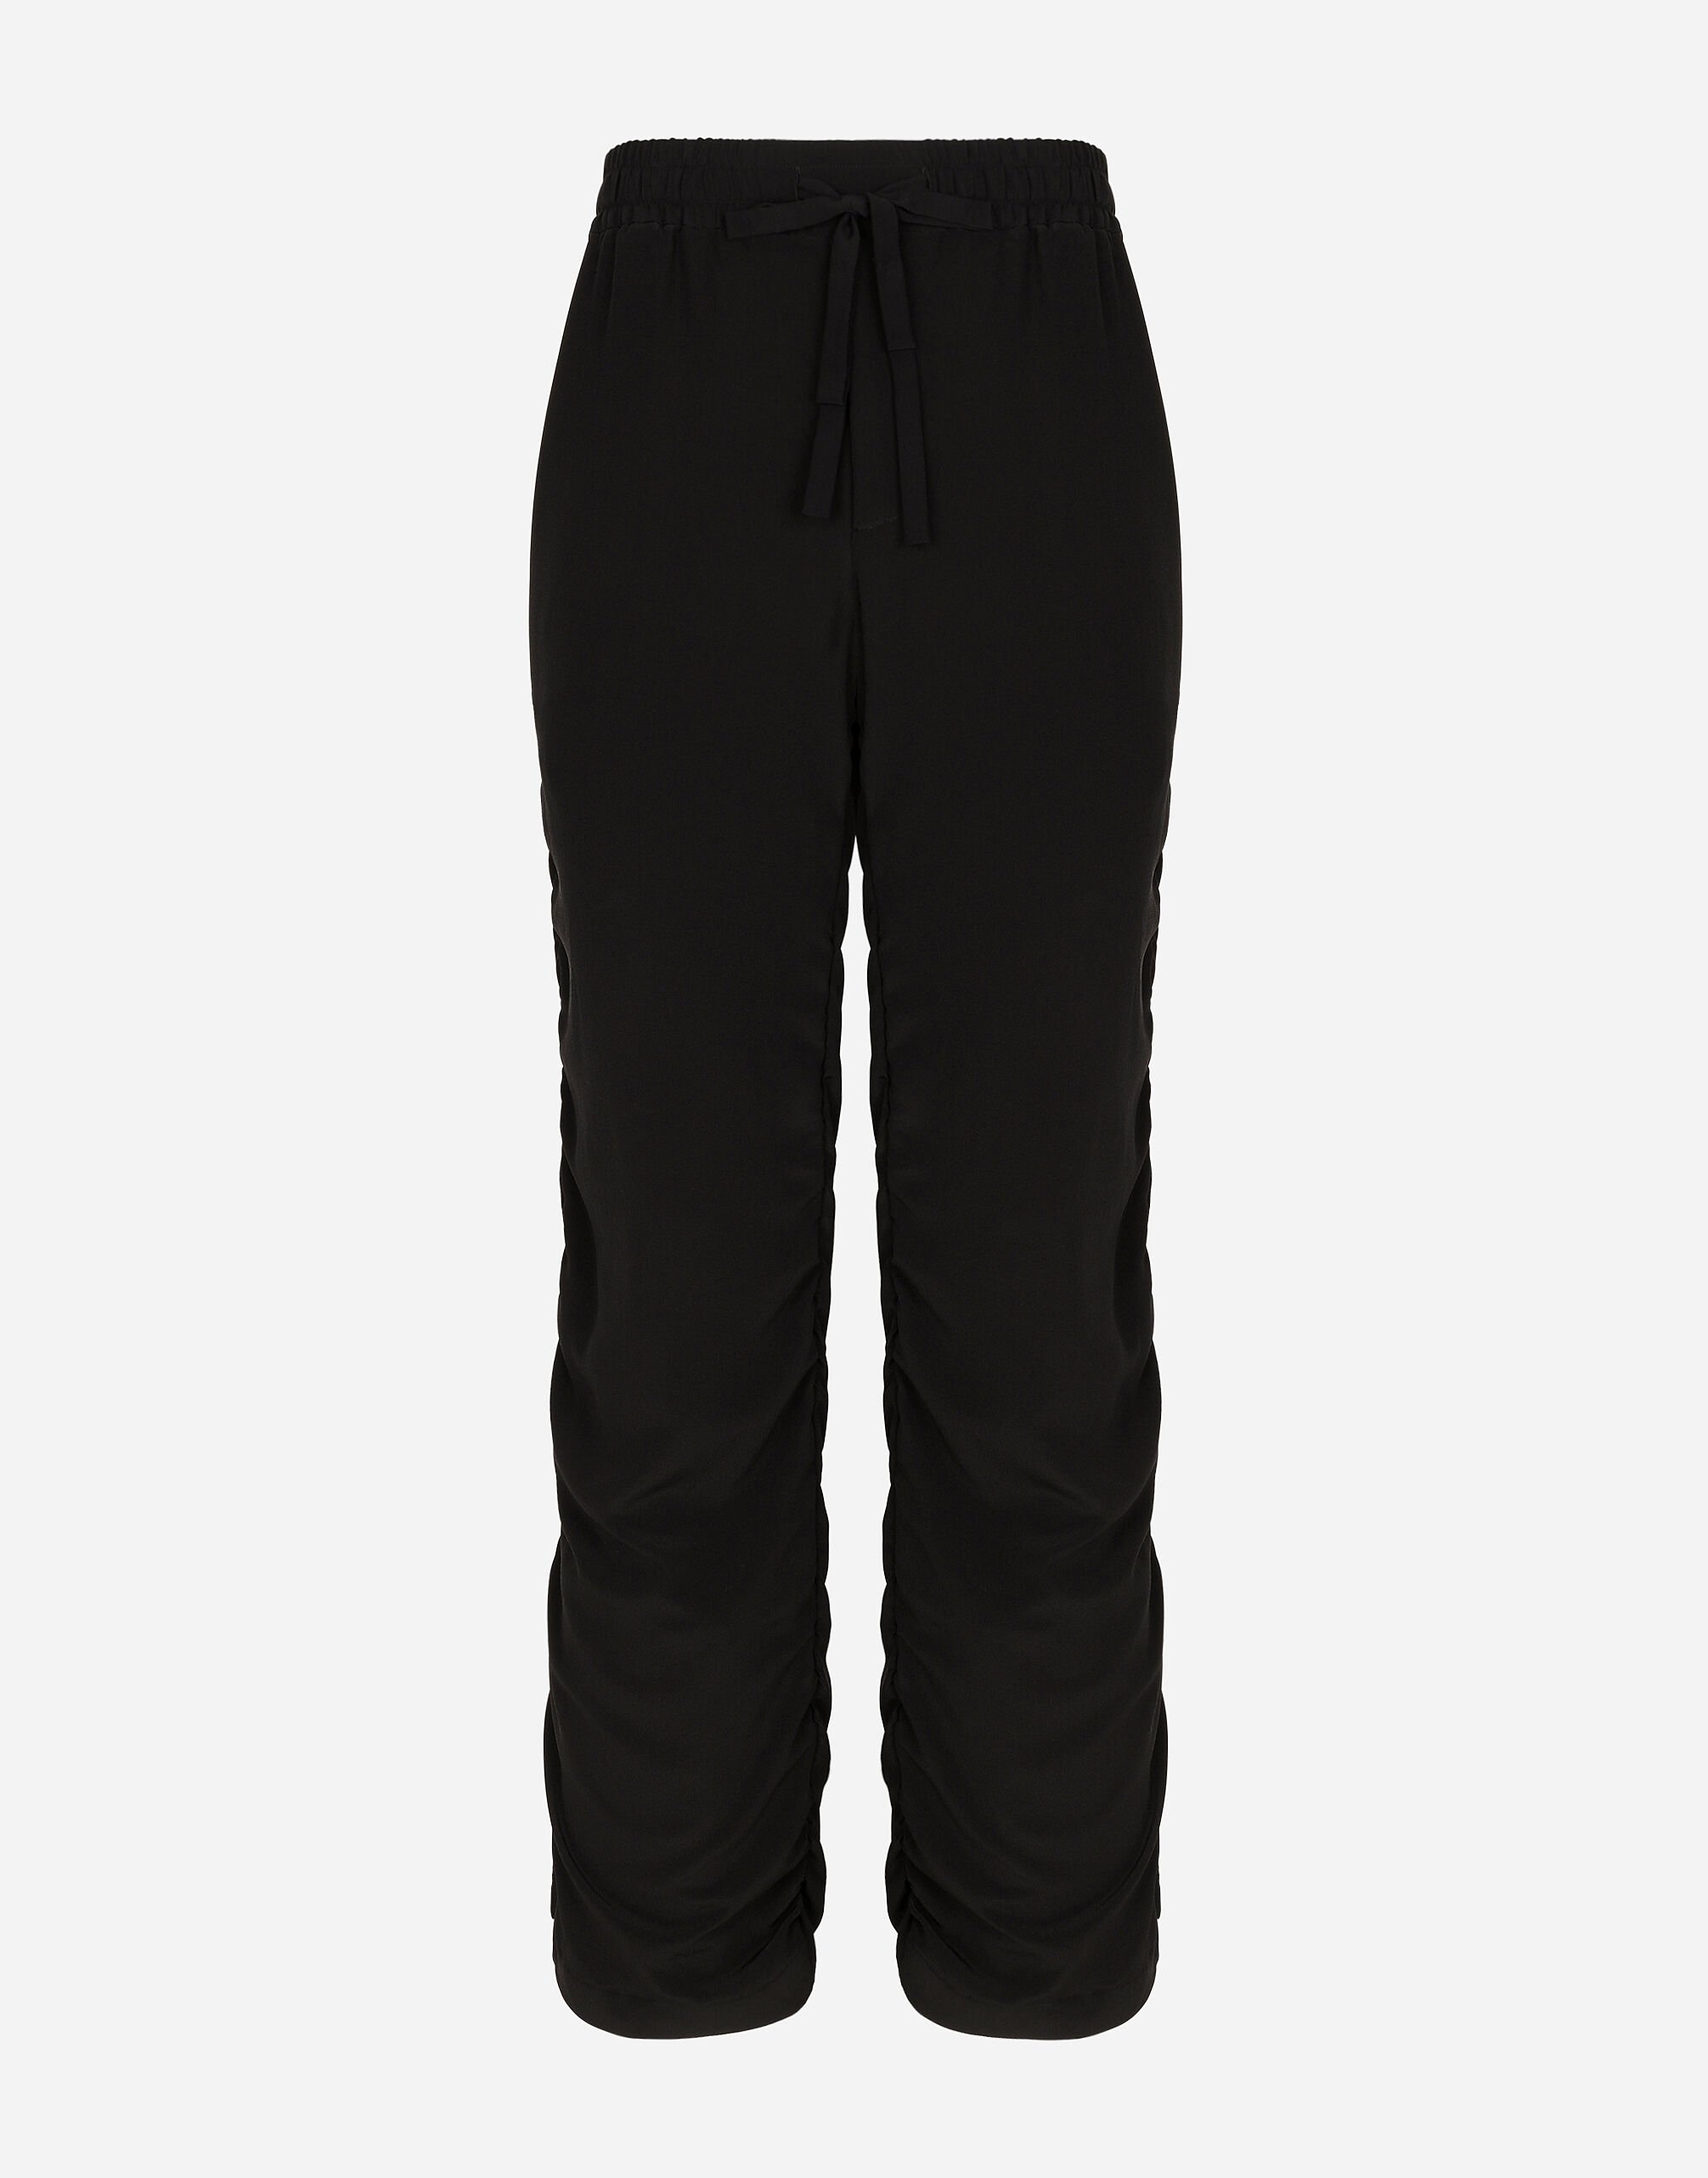 Dolce & Gabbana Silk jogging pants with gathered detailing Black GP03JTGH253